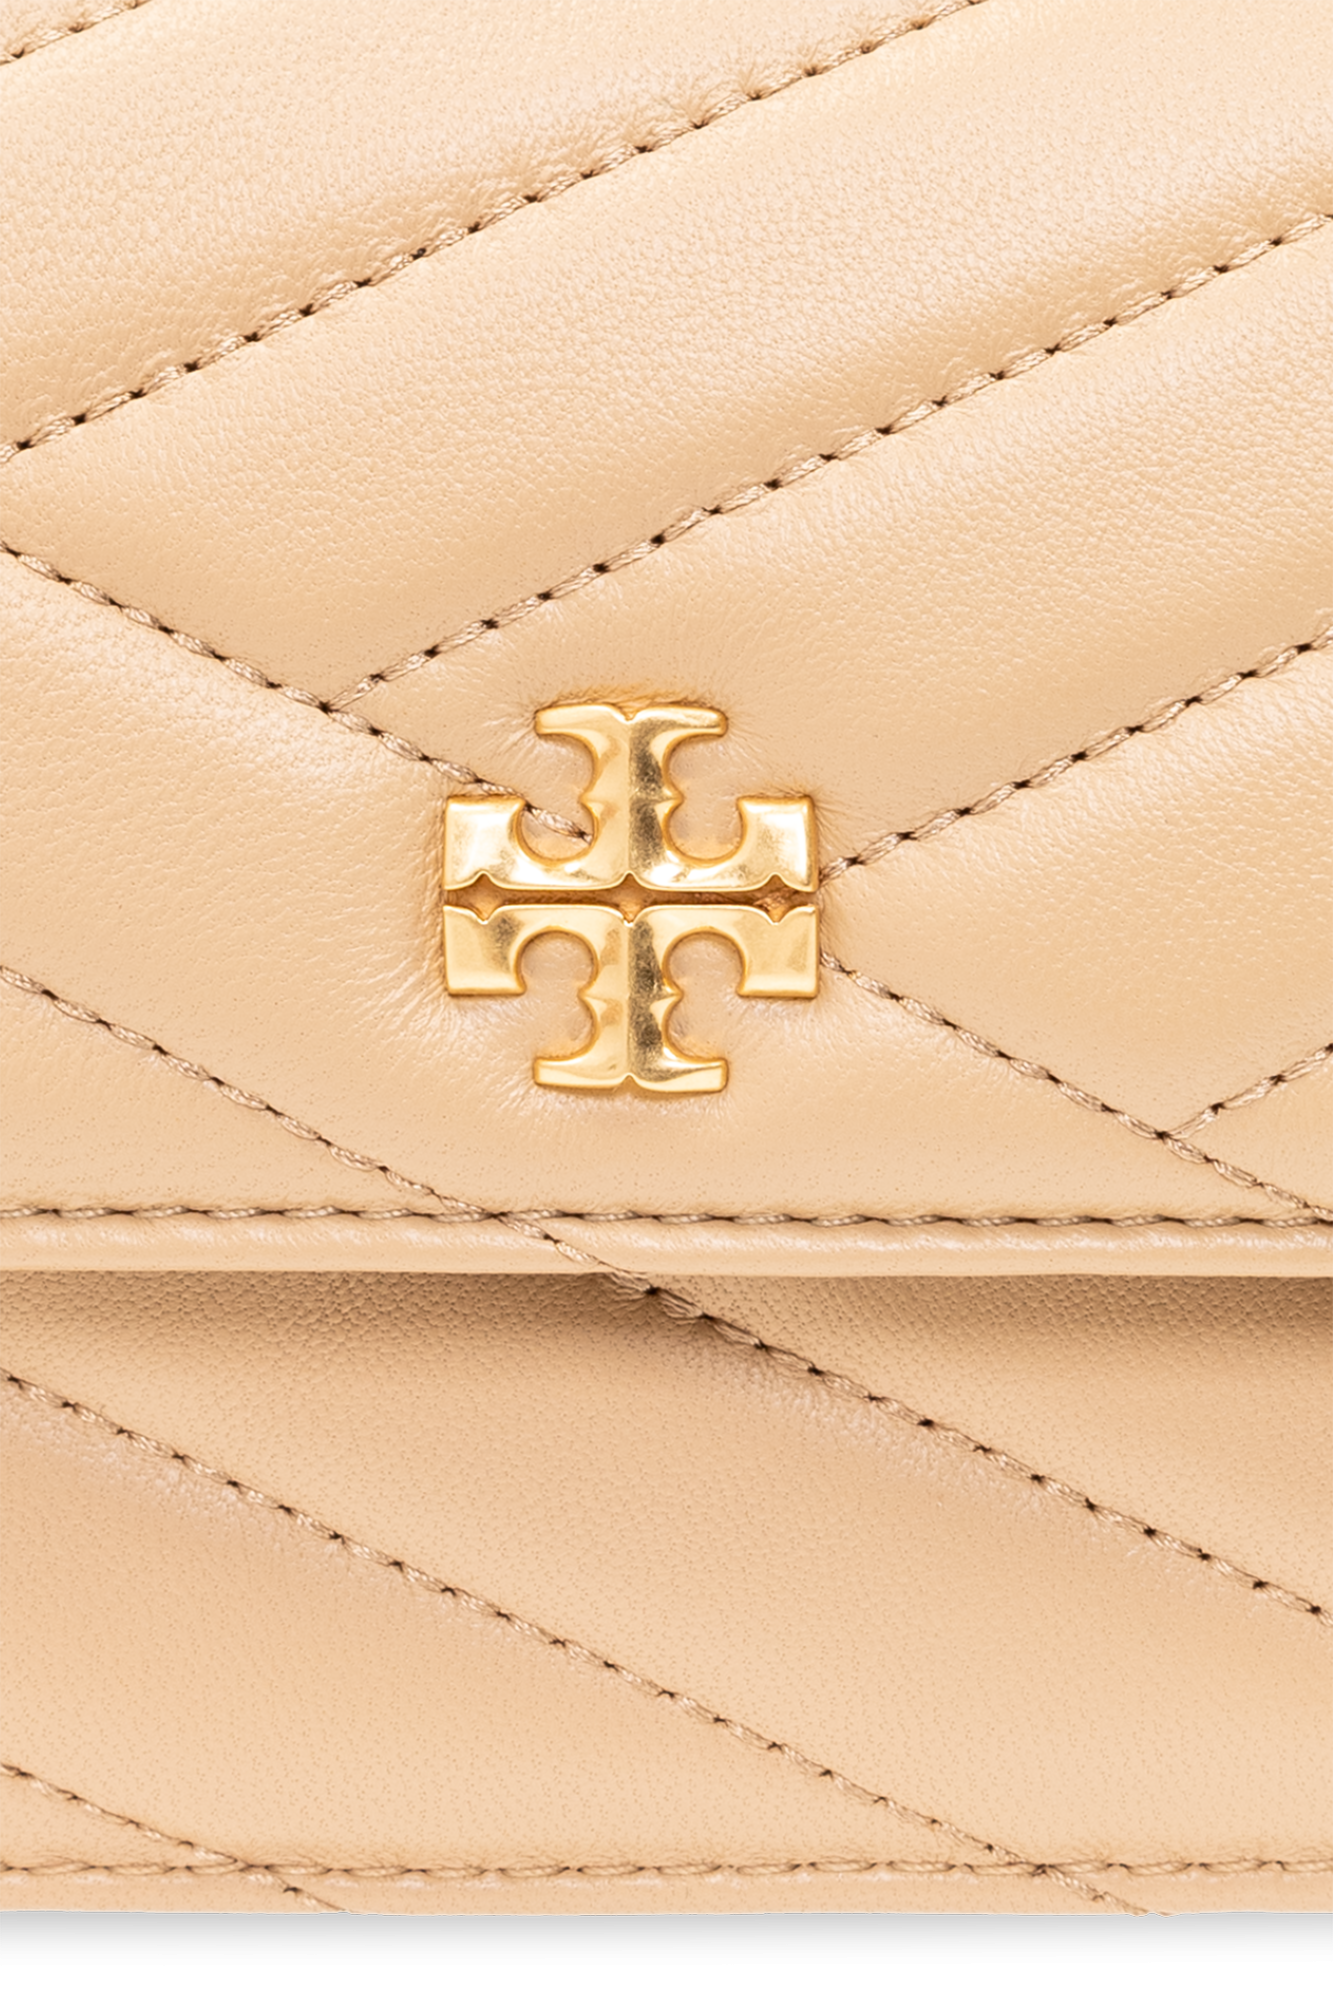 Kira Pebbled Chain Wallet: Women's Designer Mini Bags